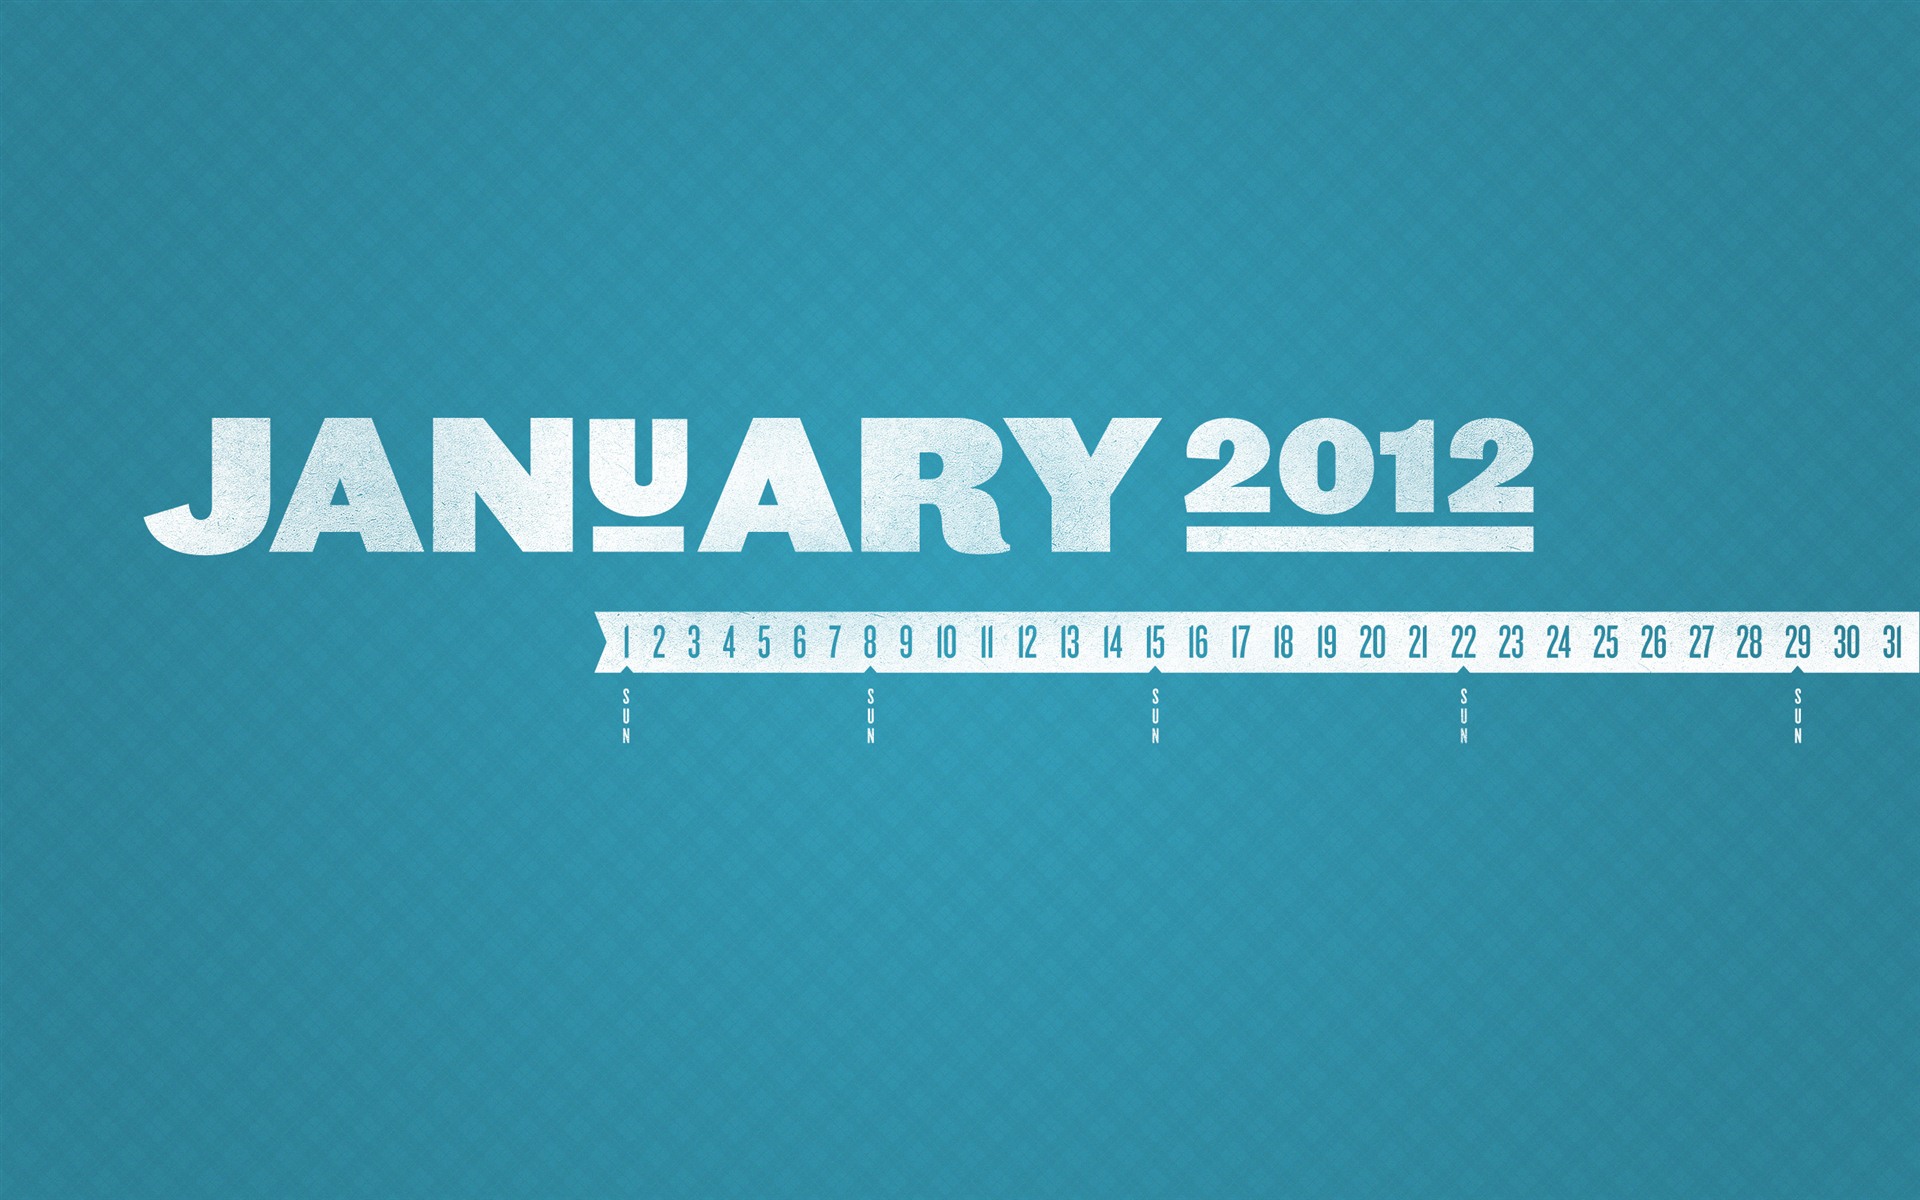 January 2012 Calendar Wallpapers #19 - 1920x1200